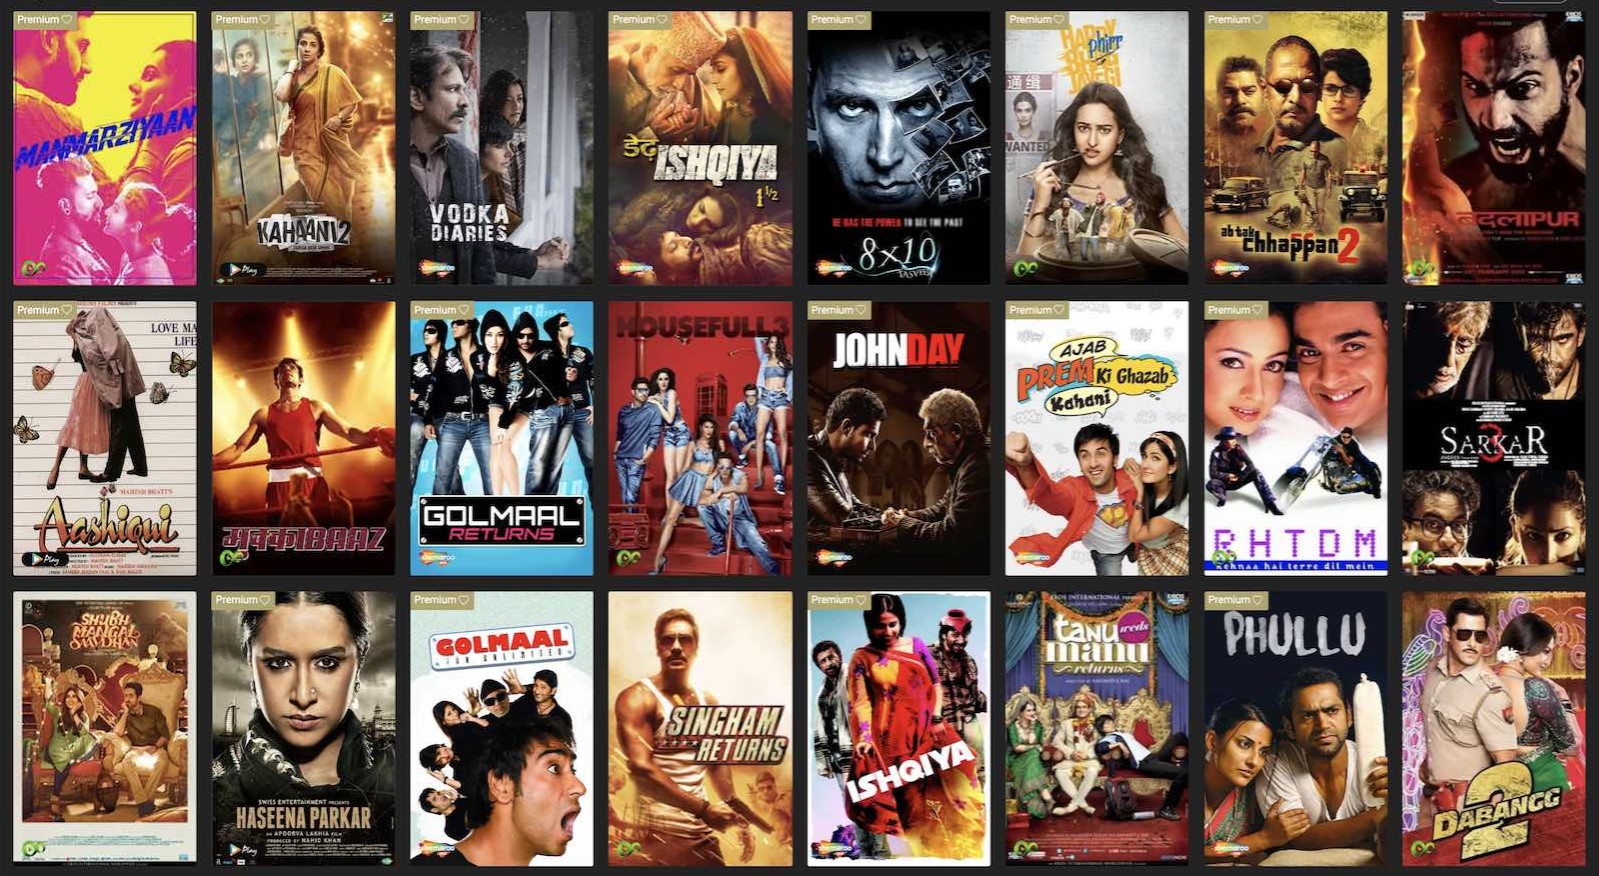 9kmovies Website 2023 - Hindi Latest Movies Download